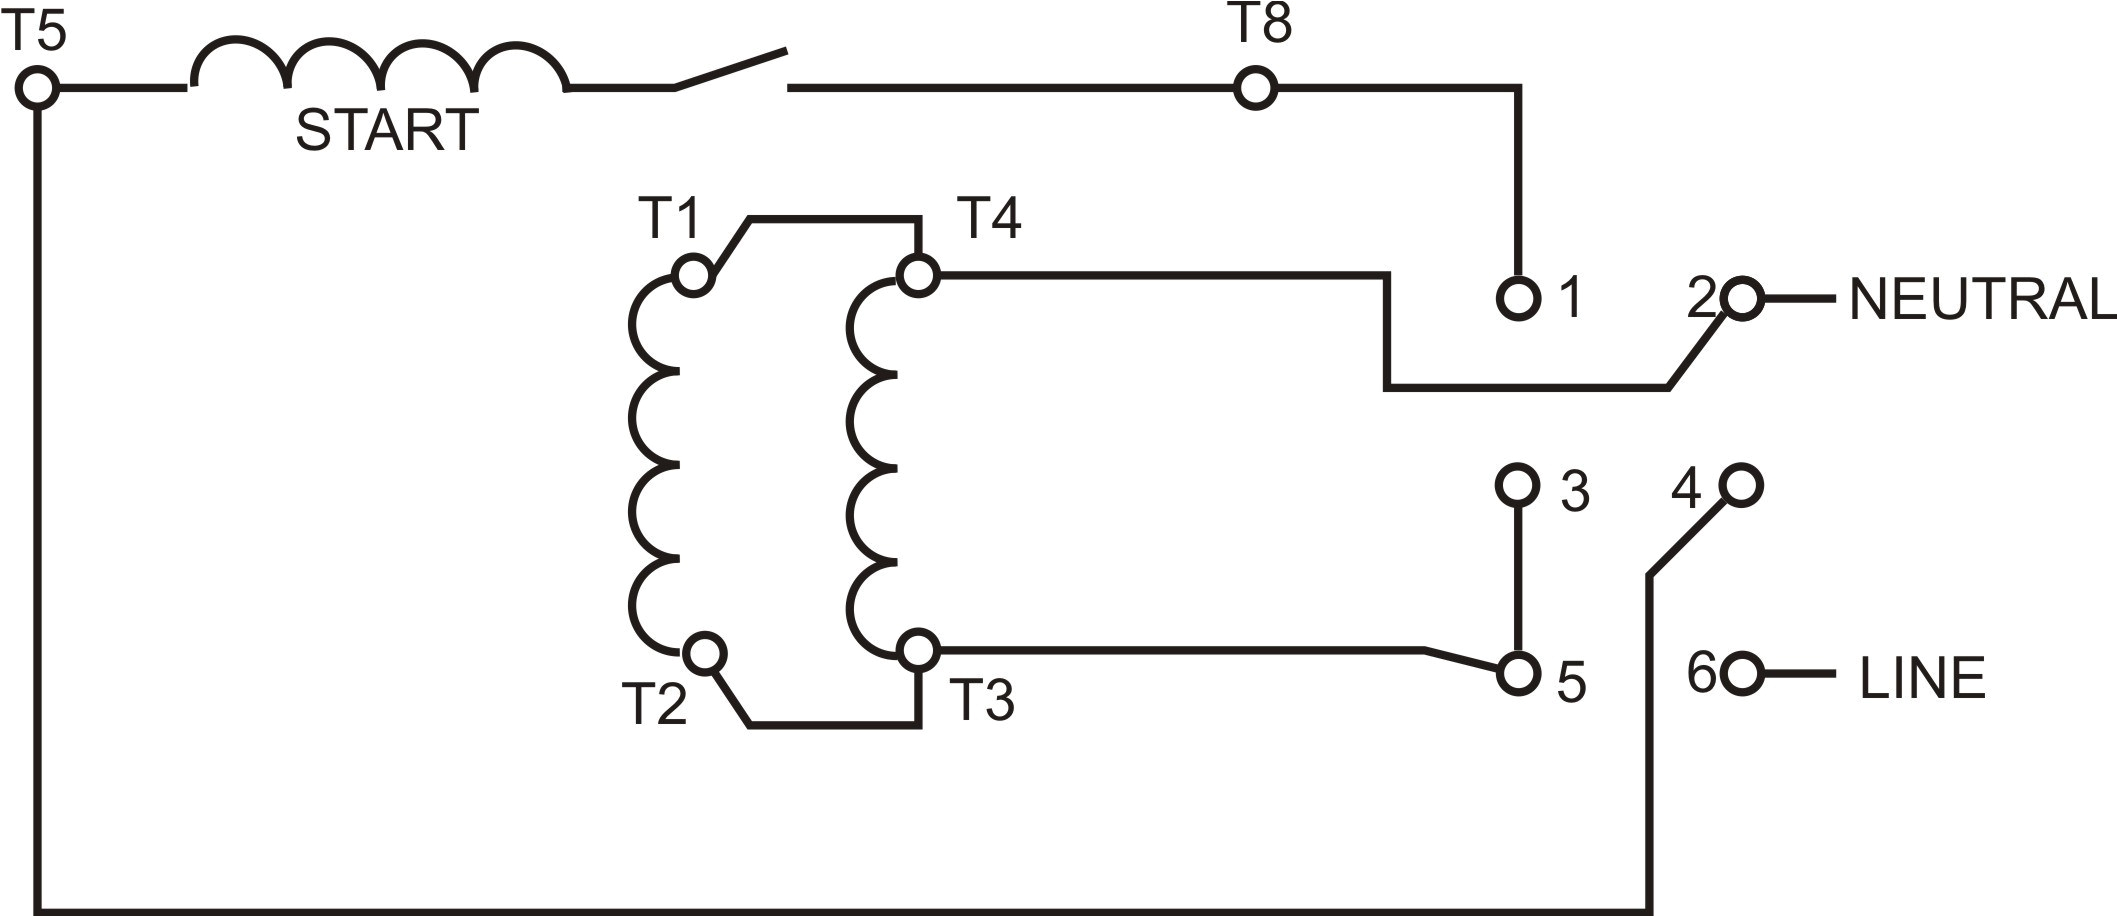 electric motor wiring diagram 110 to 220 electric motor wiring diagram 220 to 110 wiring diagram for single phase reversing motor best 19l jpg